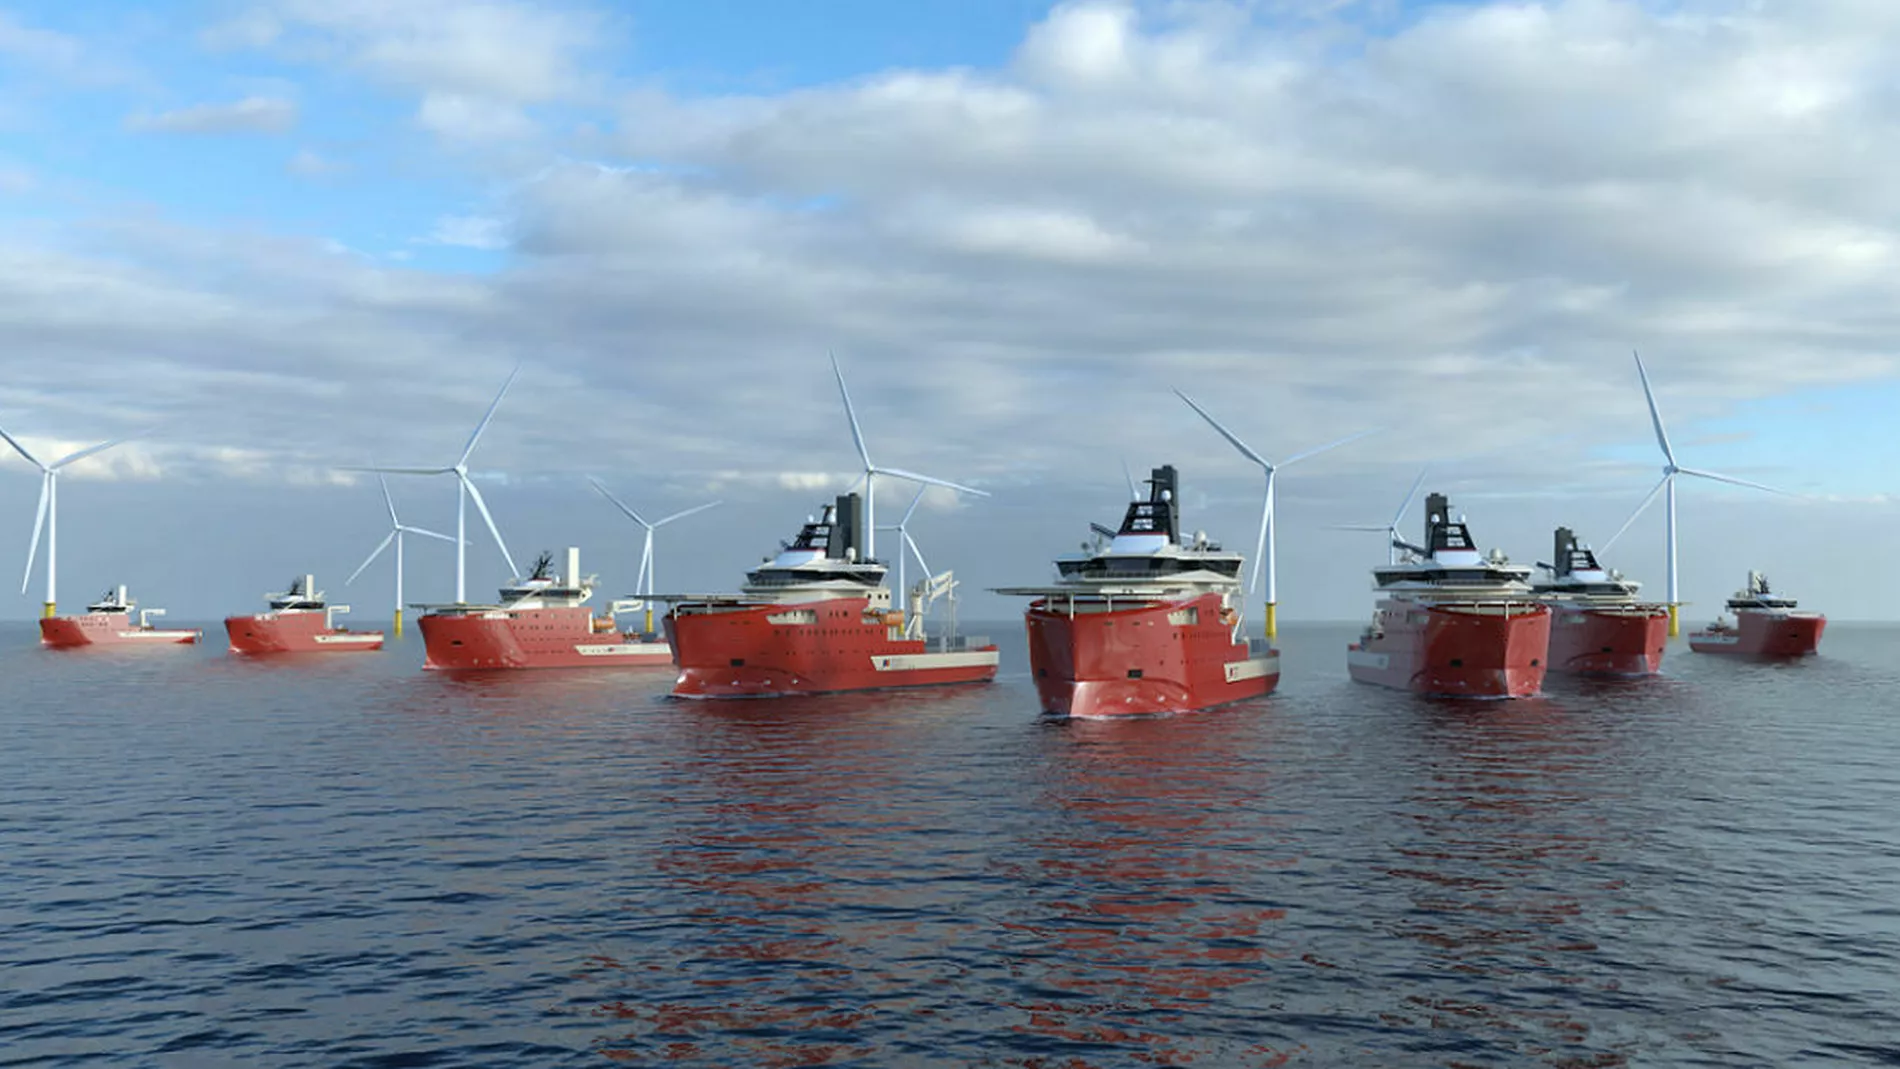 North Stars offshore wind portfolio of VARD built CSO Vs and SO Vs